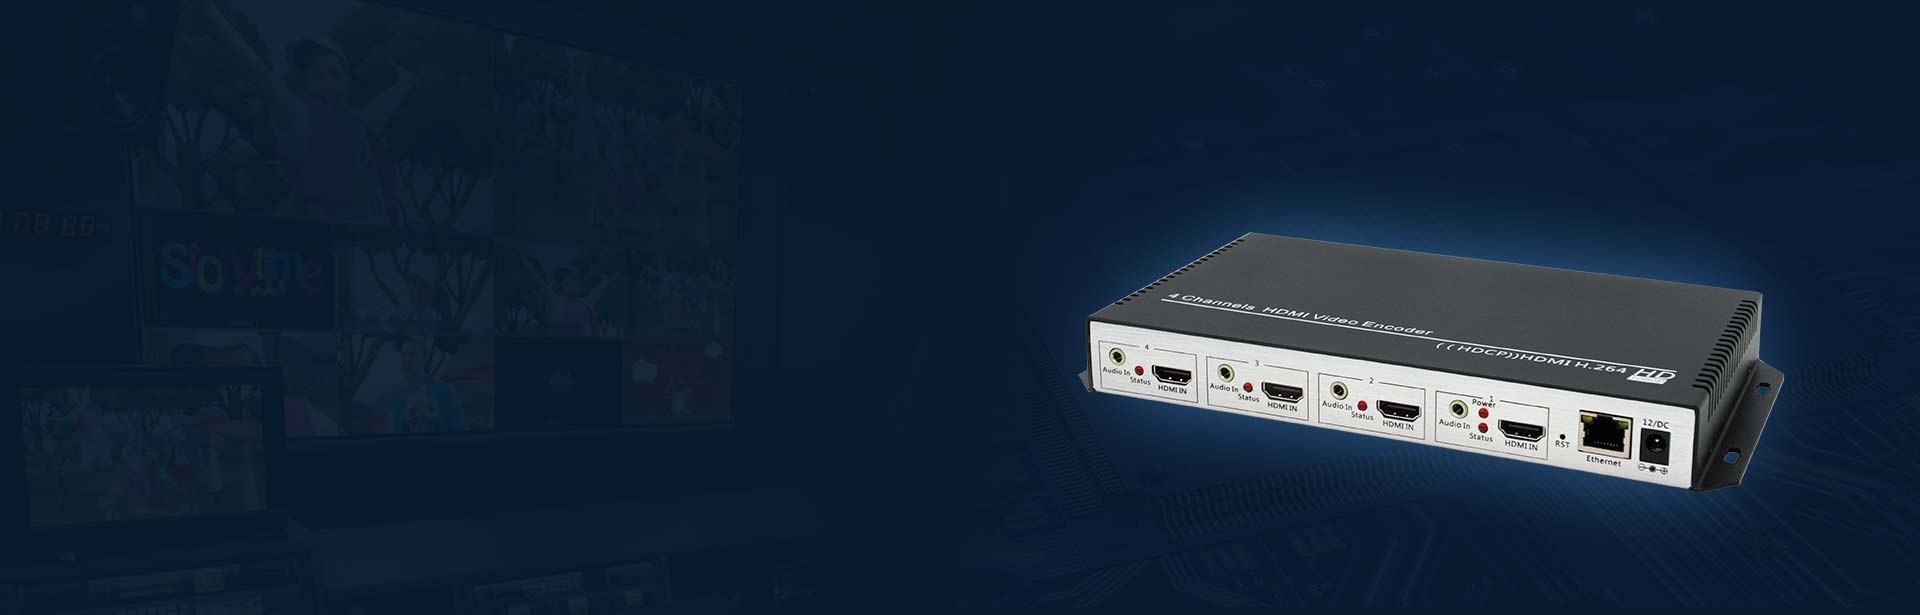 4 Channel HDMI Encoder For IPTV, Live Stream, Broadcast